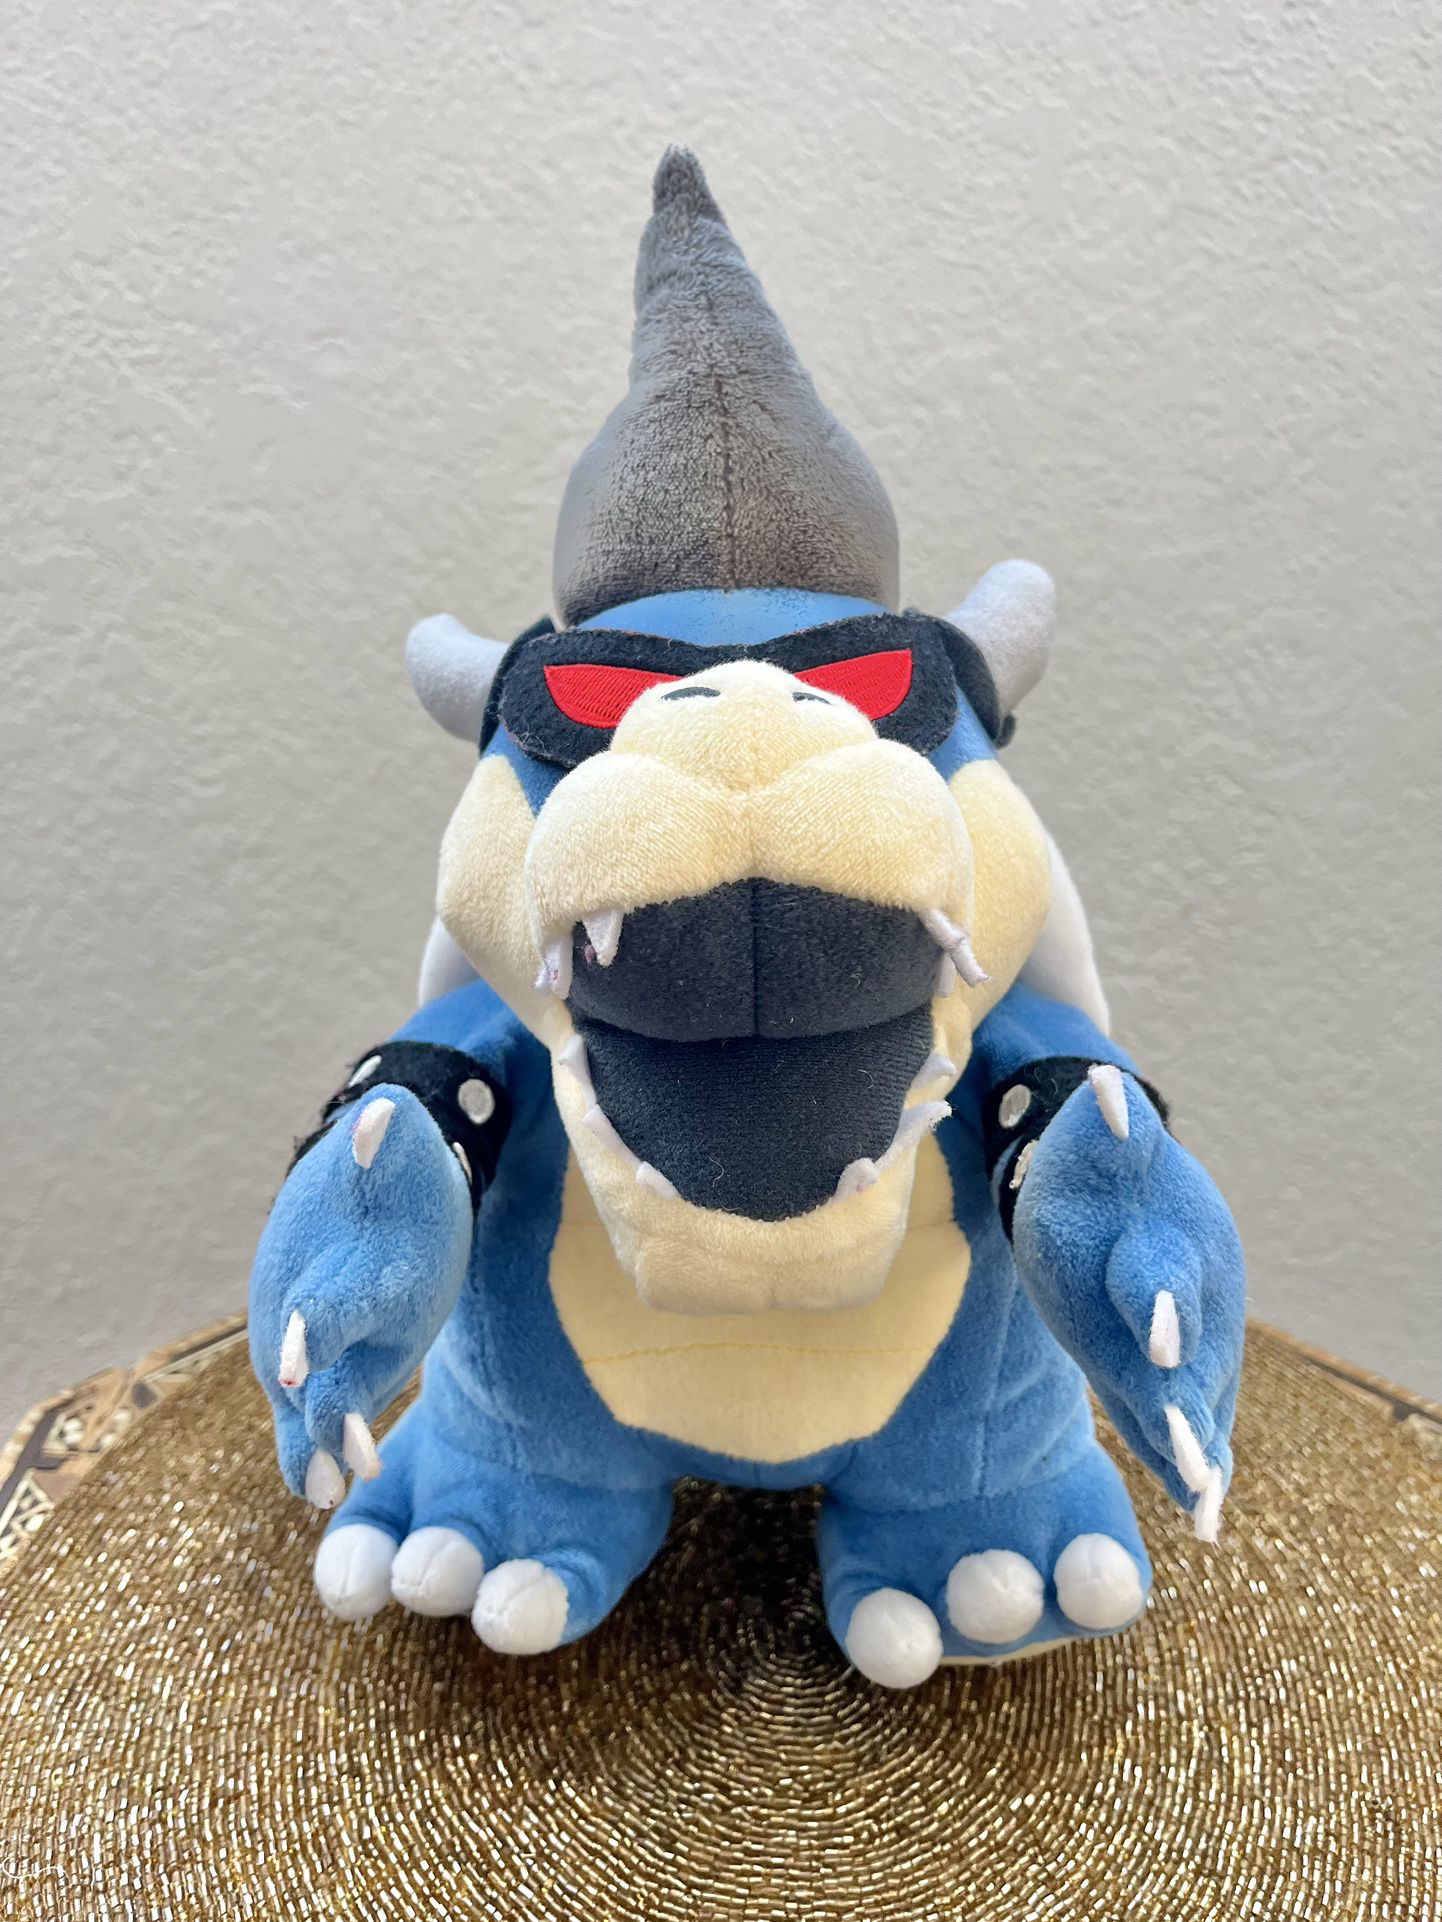 Best Super Mario Dark Blue Bowser King Koopa Size Stuffed Plush Toy